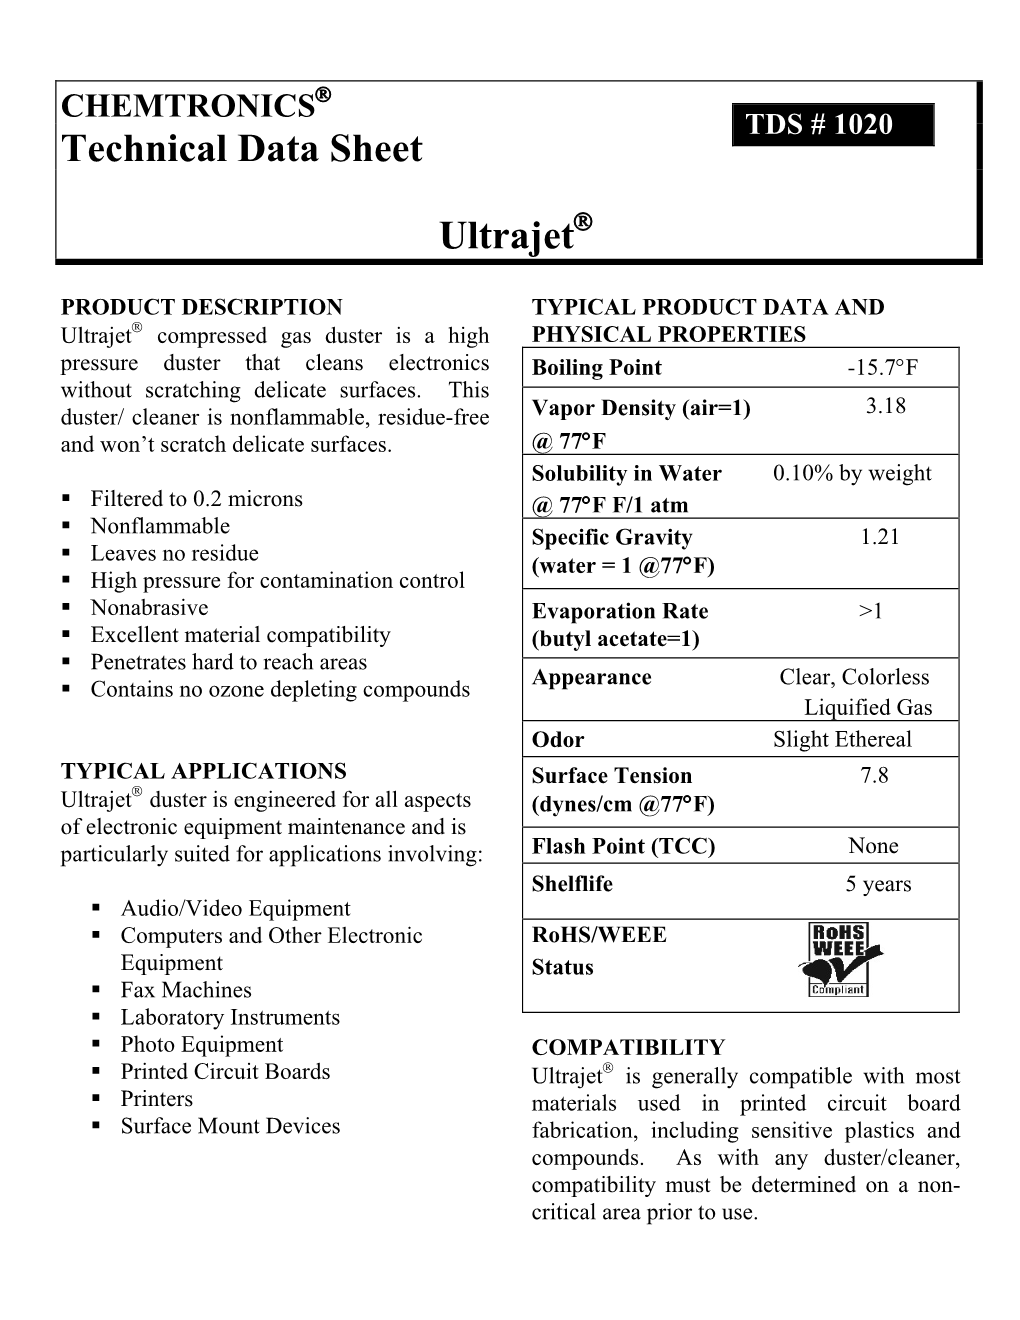 Technical Data Sheet Ultrajet